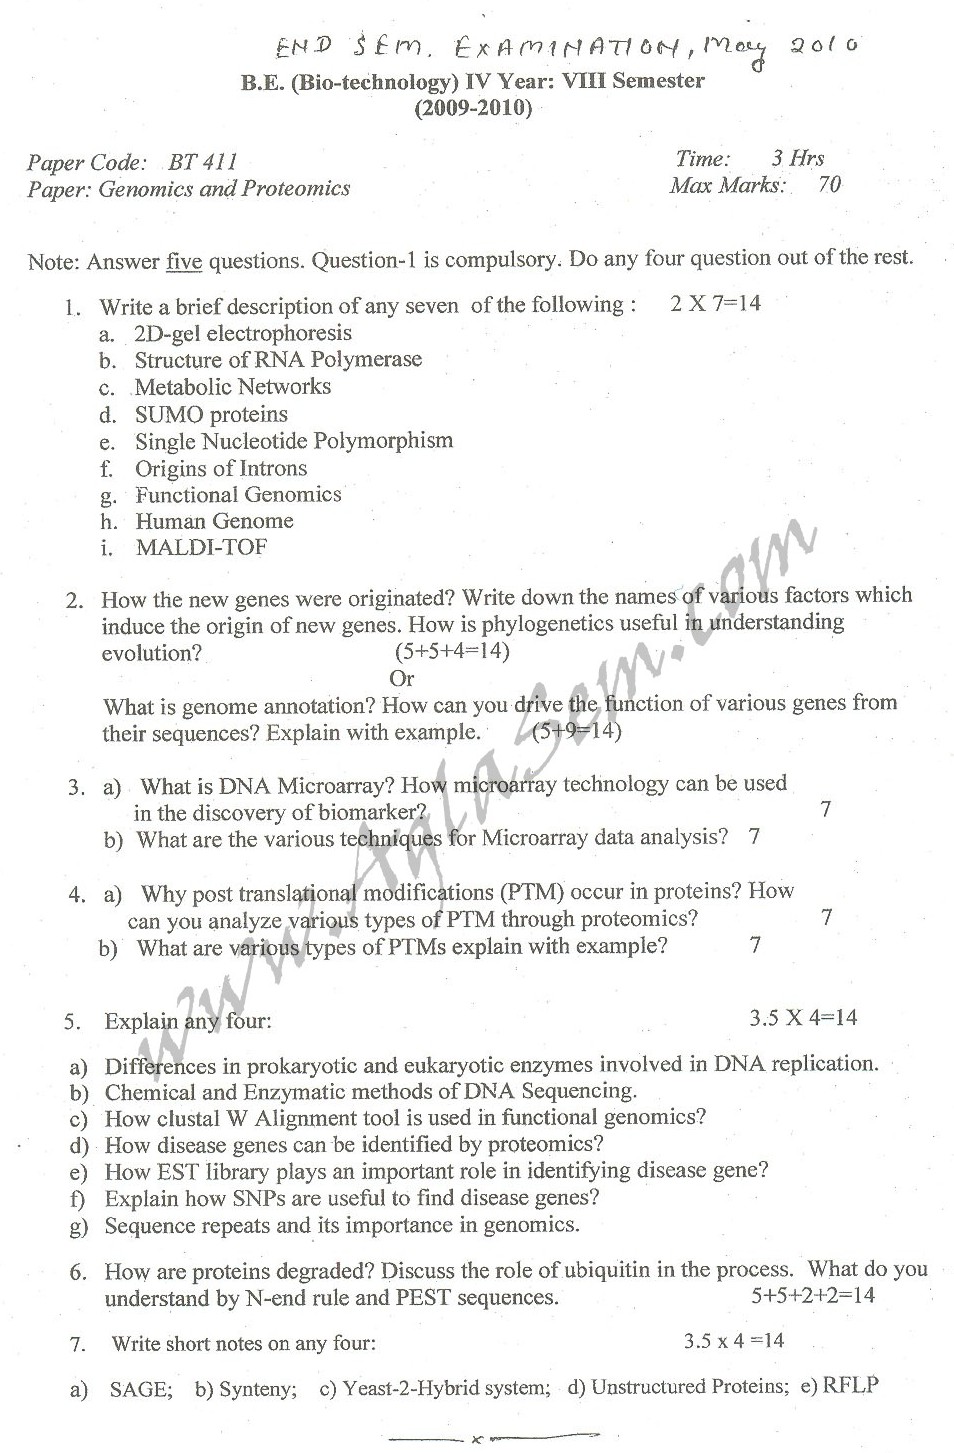 DTU Question Papers 2010 – 8 Semester - End Sem - BT-411